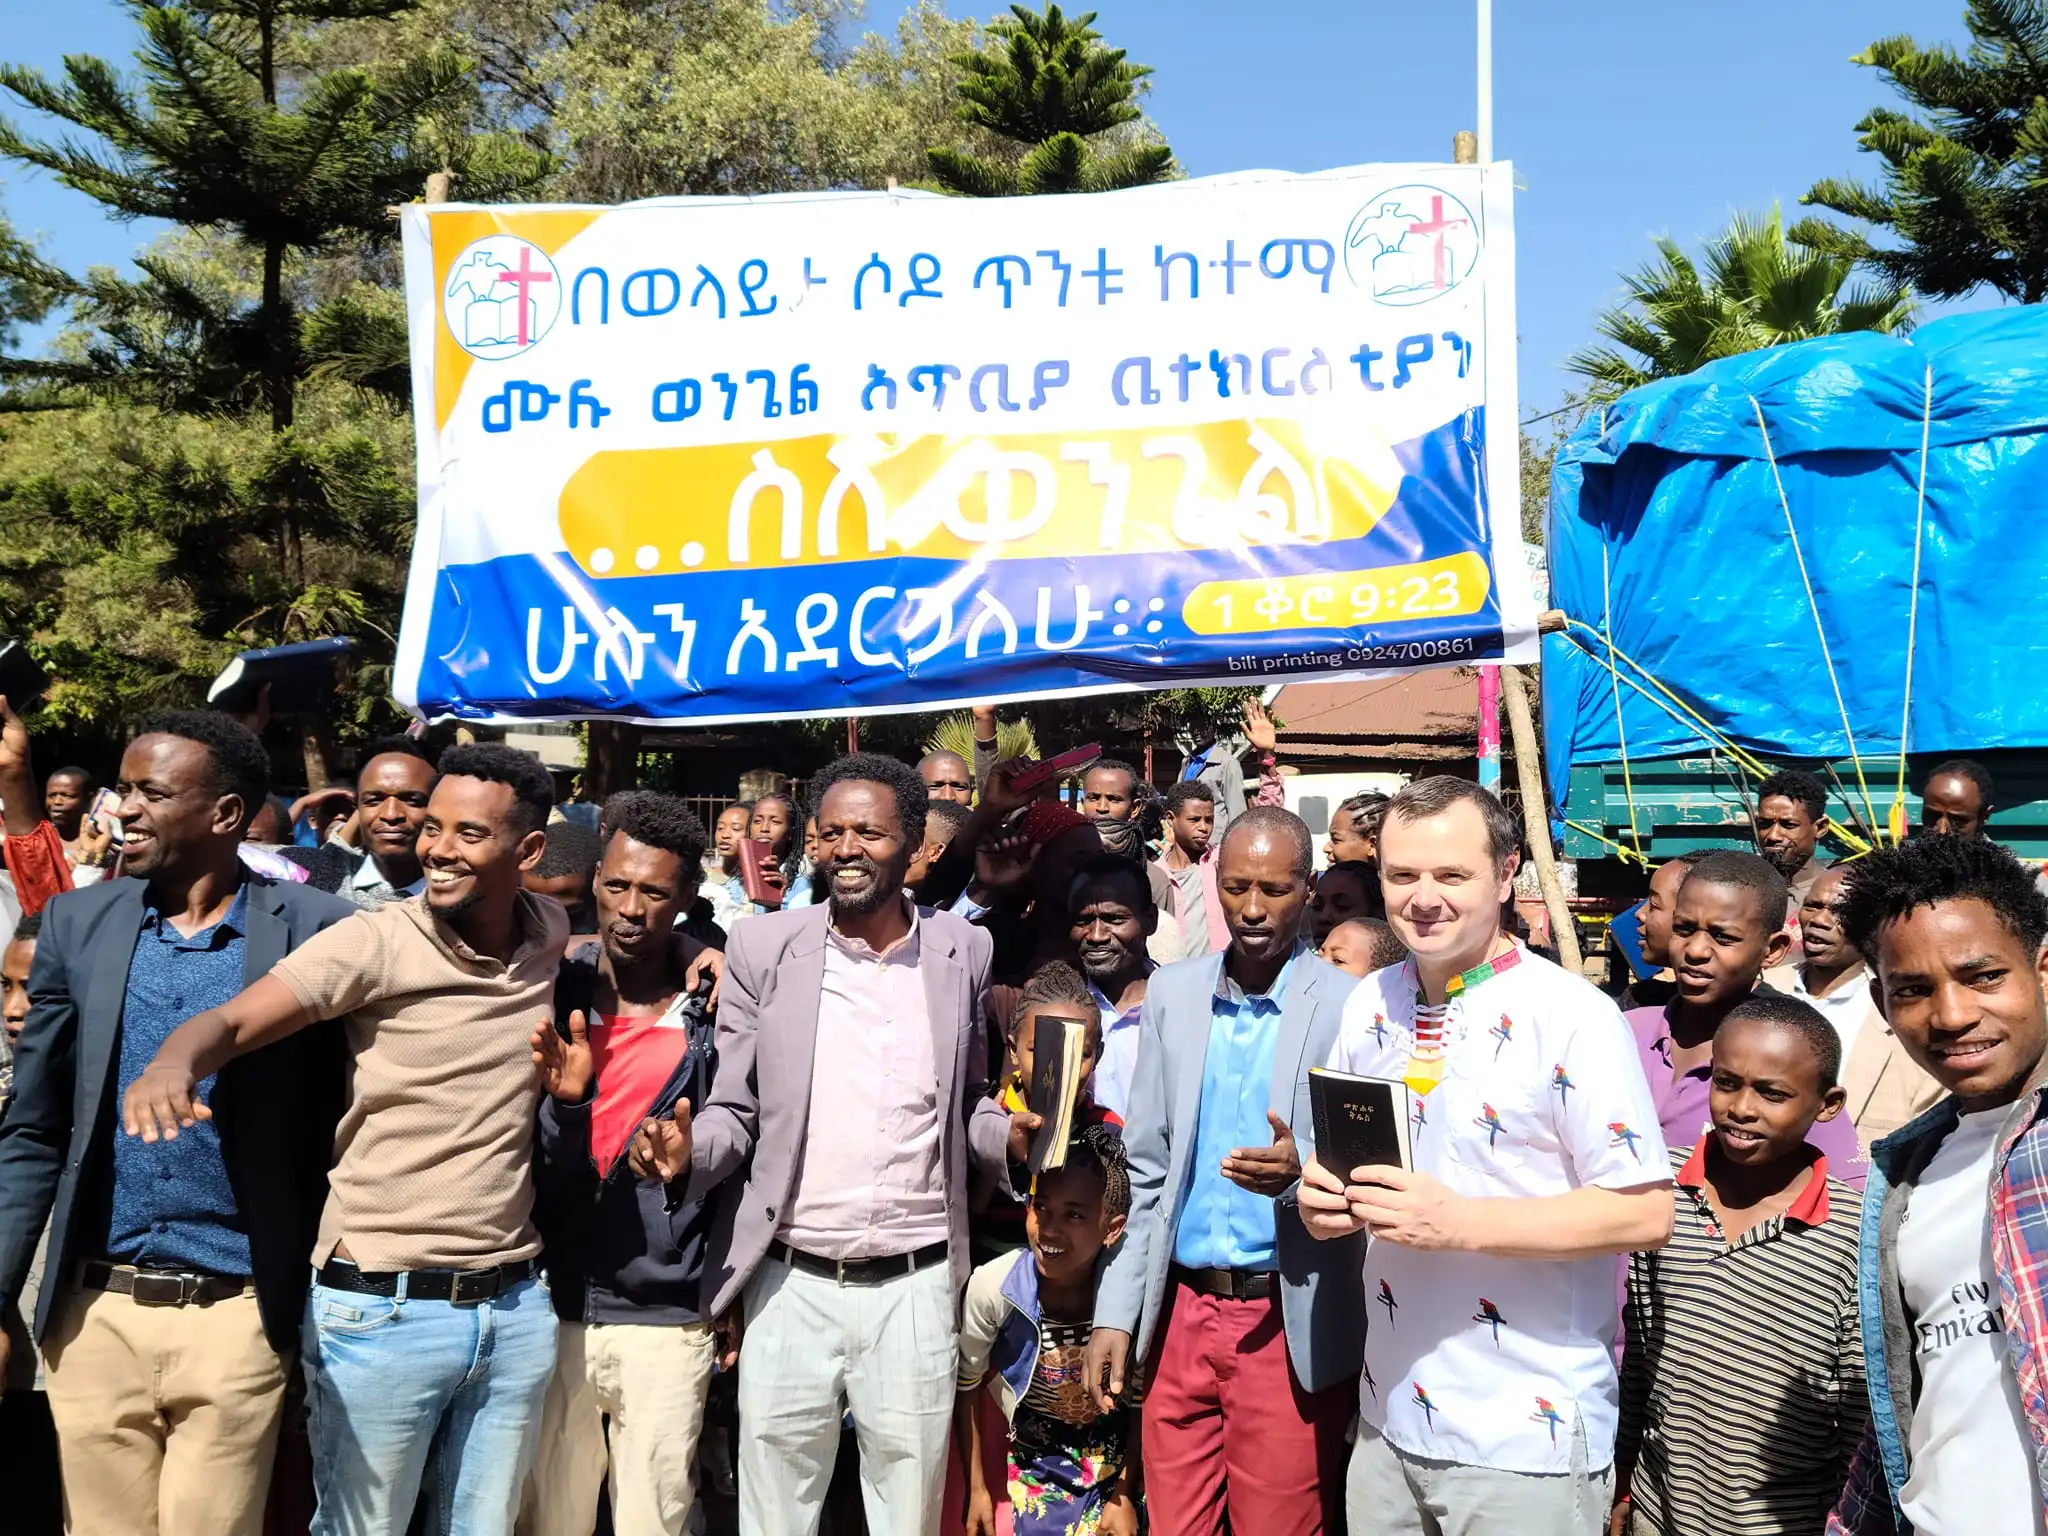 Ethiopia: about 70,000 participants heard the Gospel